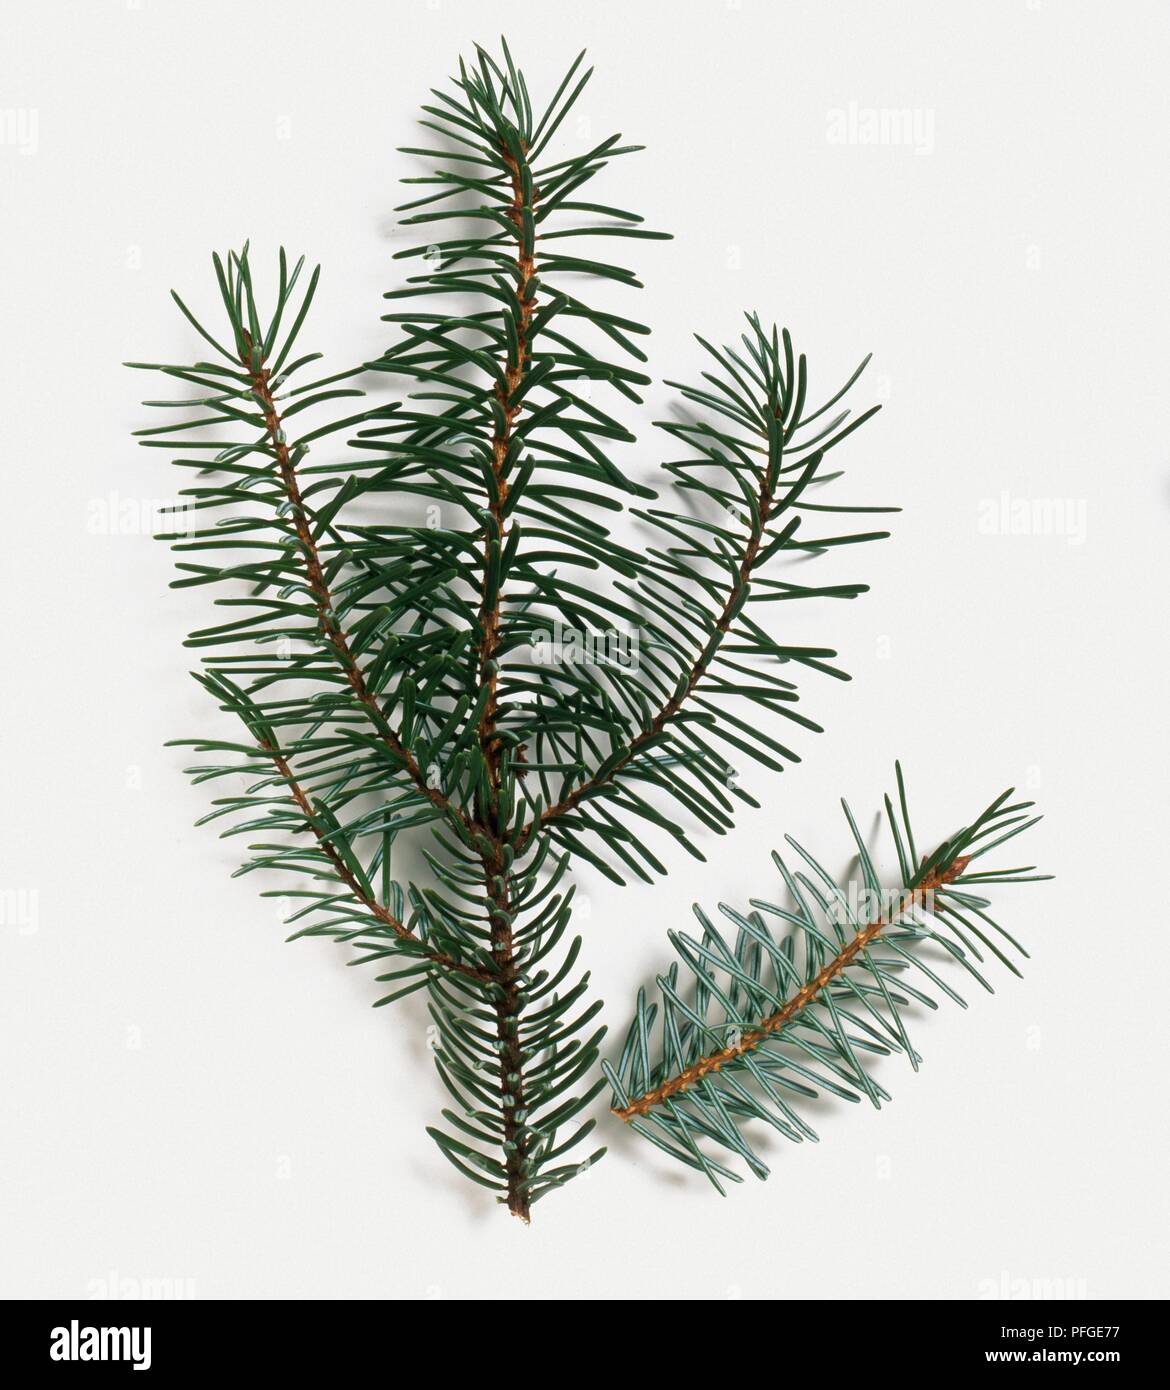 Picea omorika (Serbian Spruce), green needle leaves on stem Stock Photo